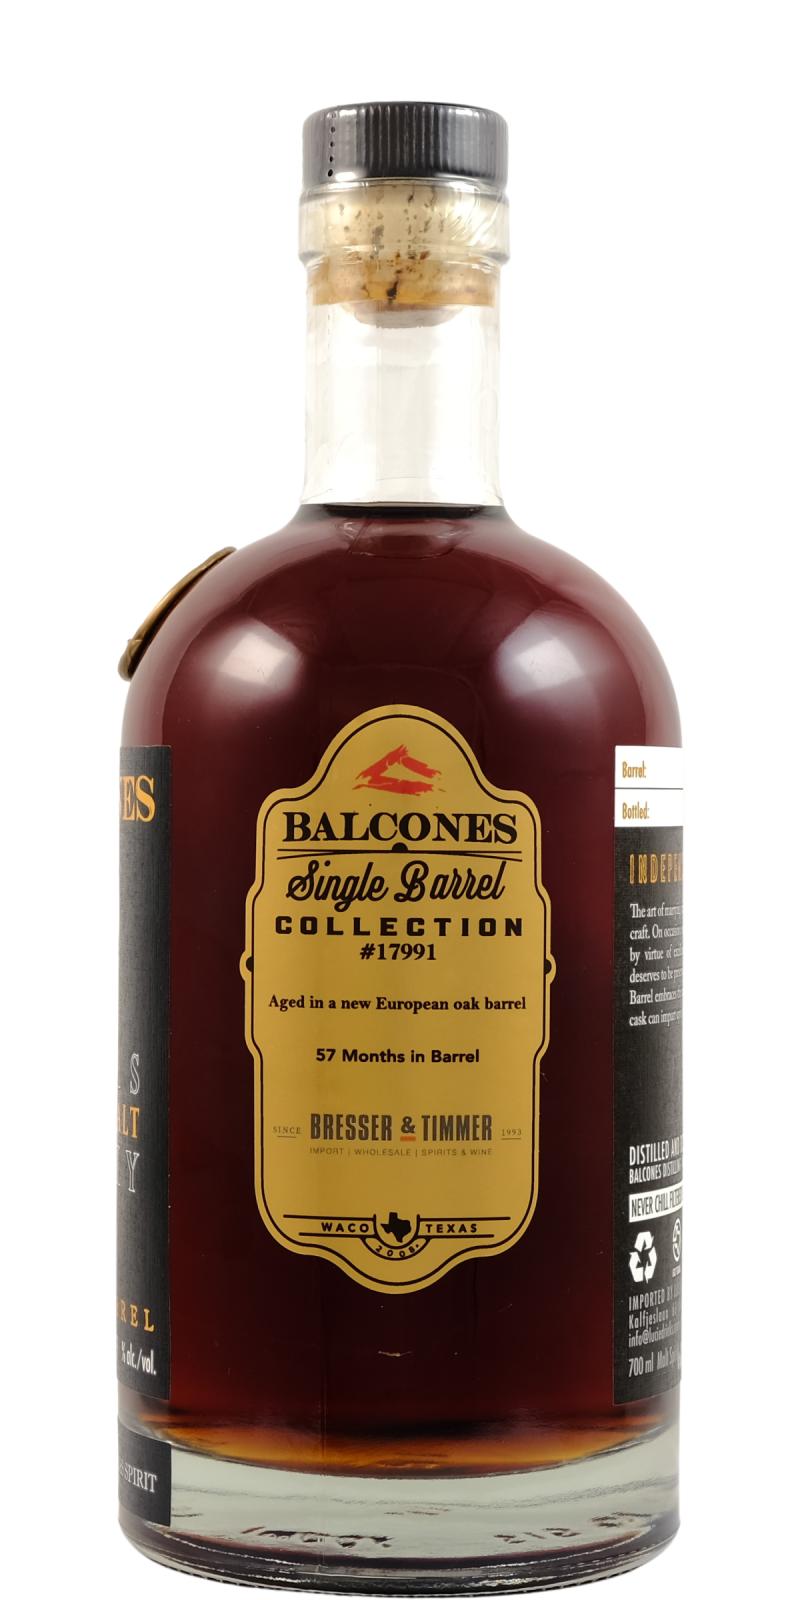 Balcones Texas Single Malt Whisky